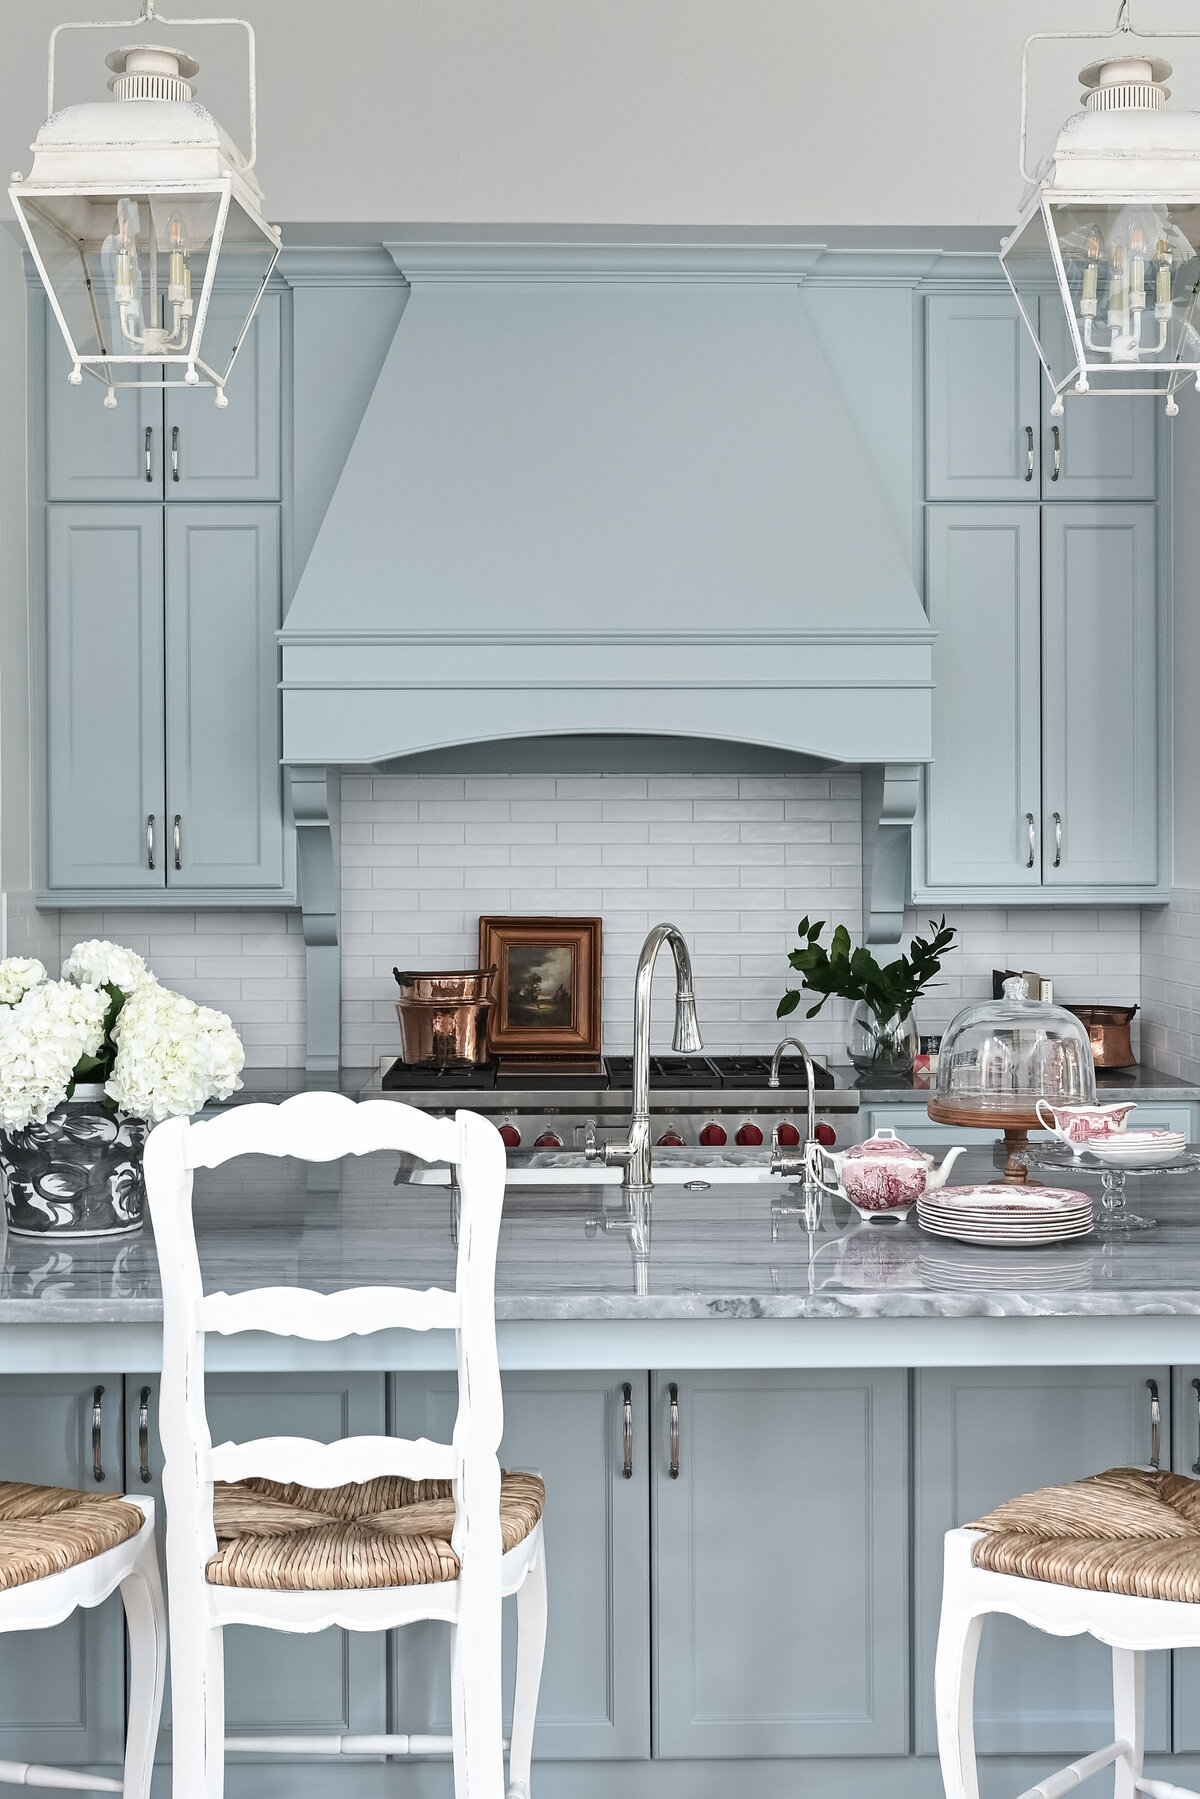 muted blue kitchen cabinets with white backsplash